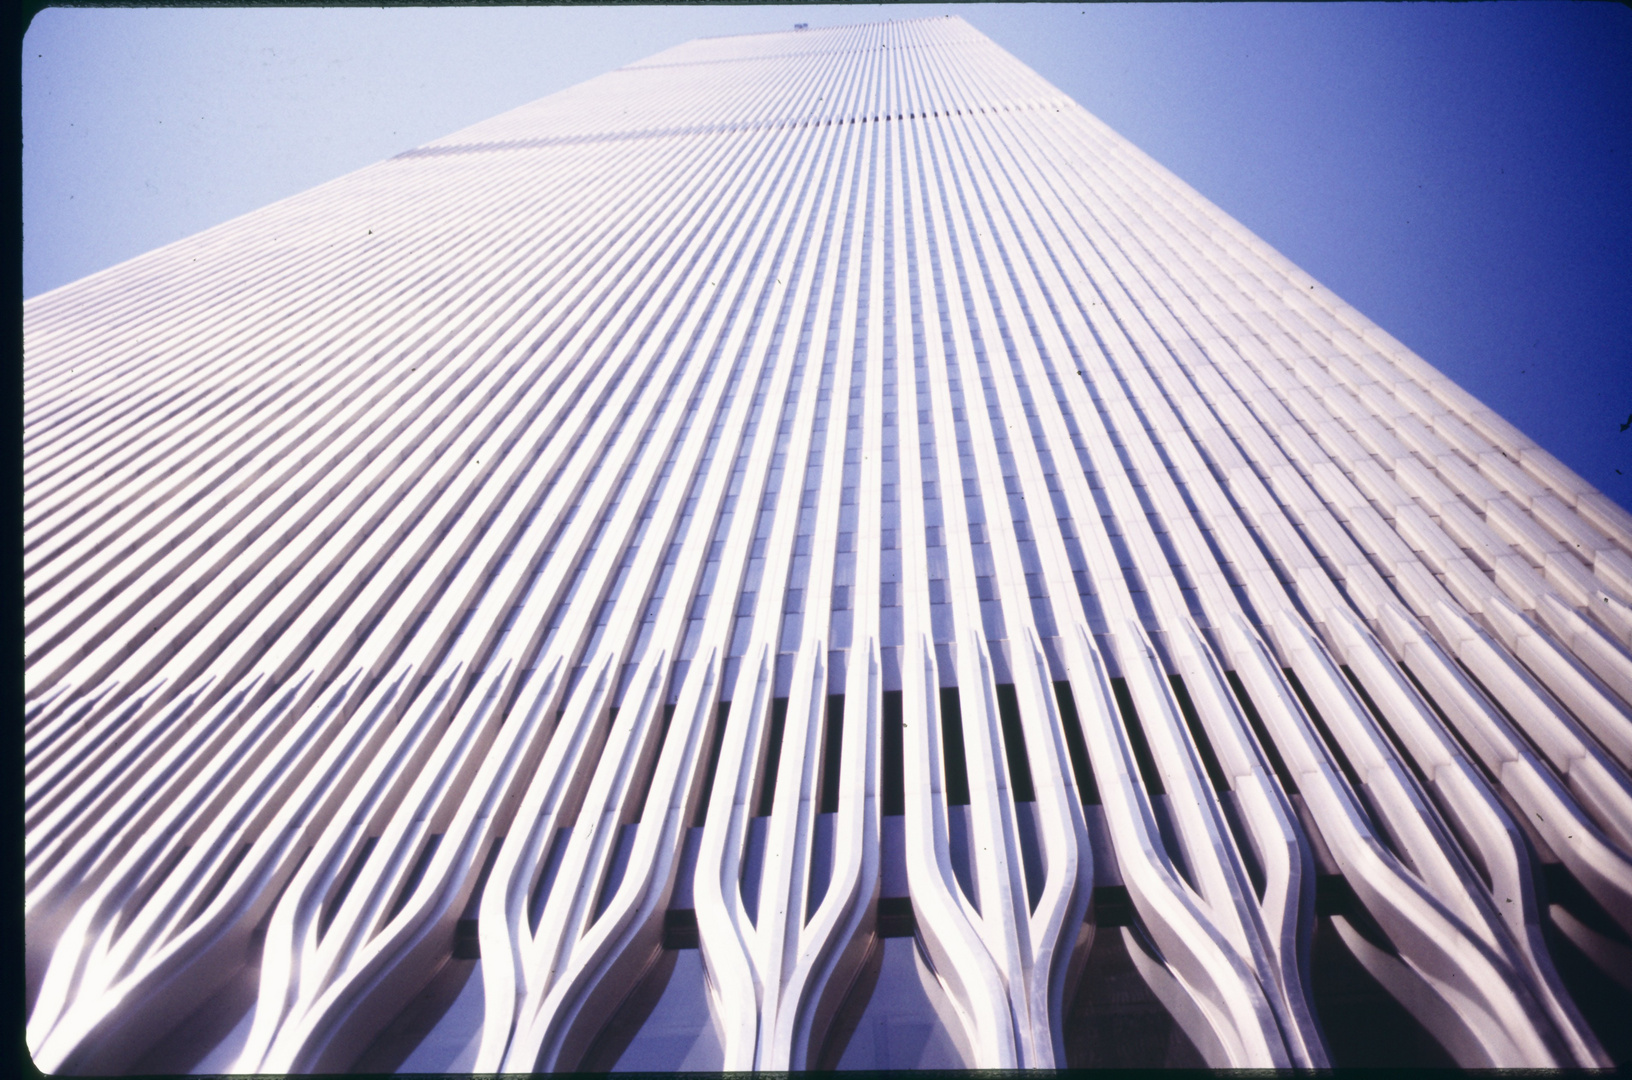 World Trade Center, NYC